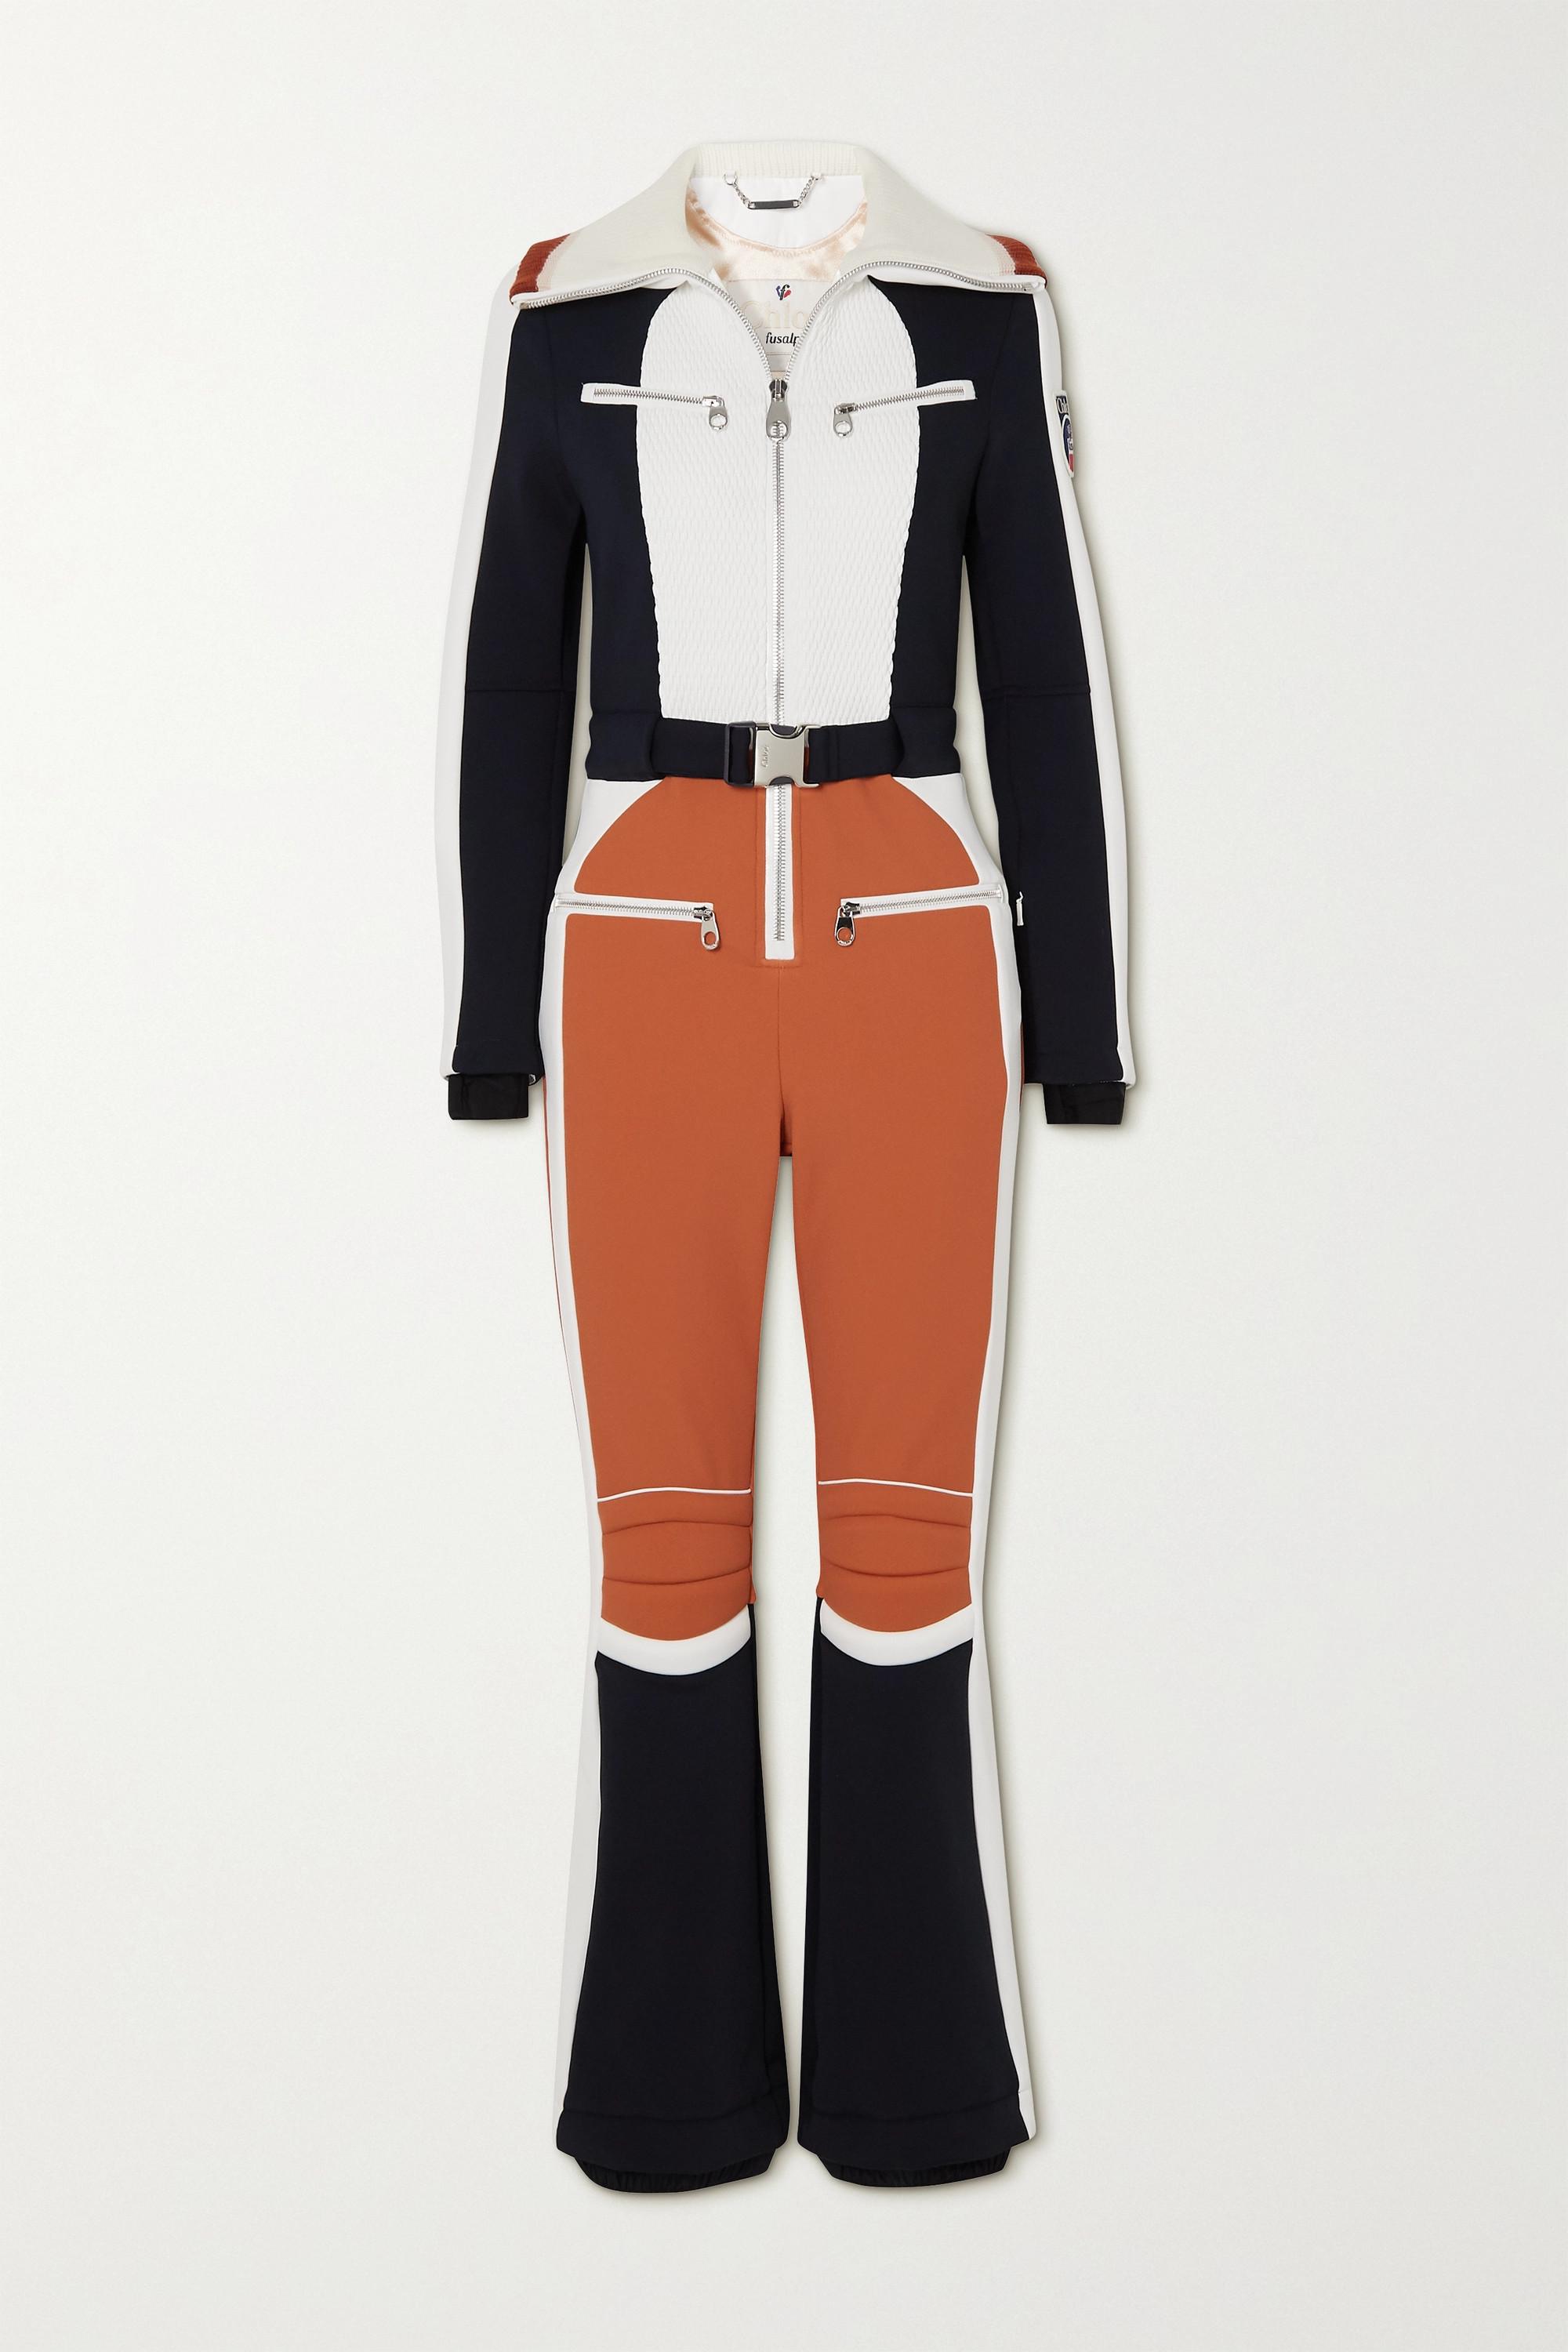 Chloé Fusalp Belted Wool-trimmed Paneled Ski Suit in Orange | Lyst